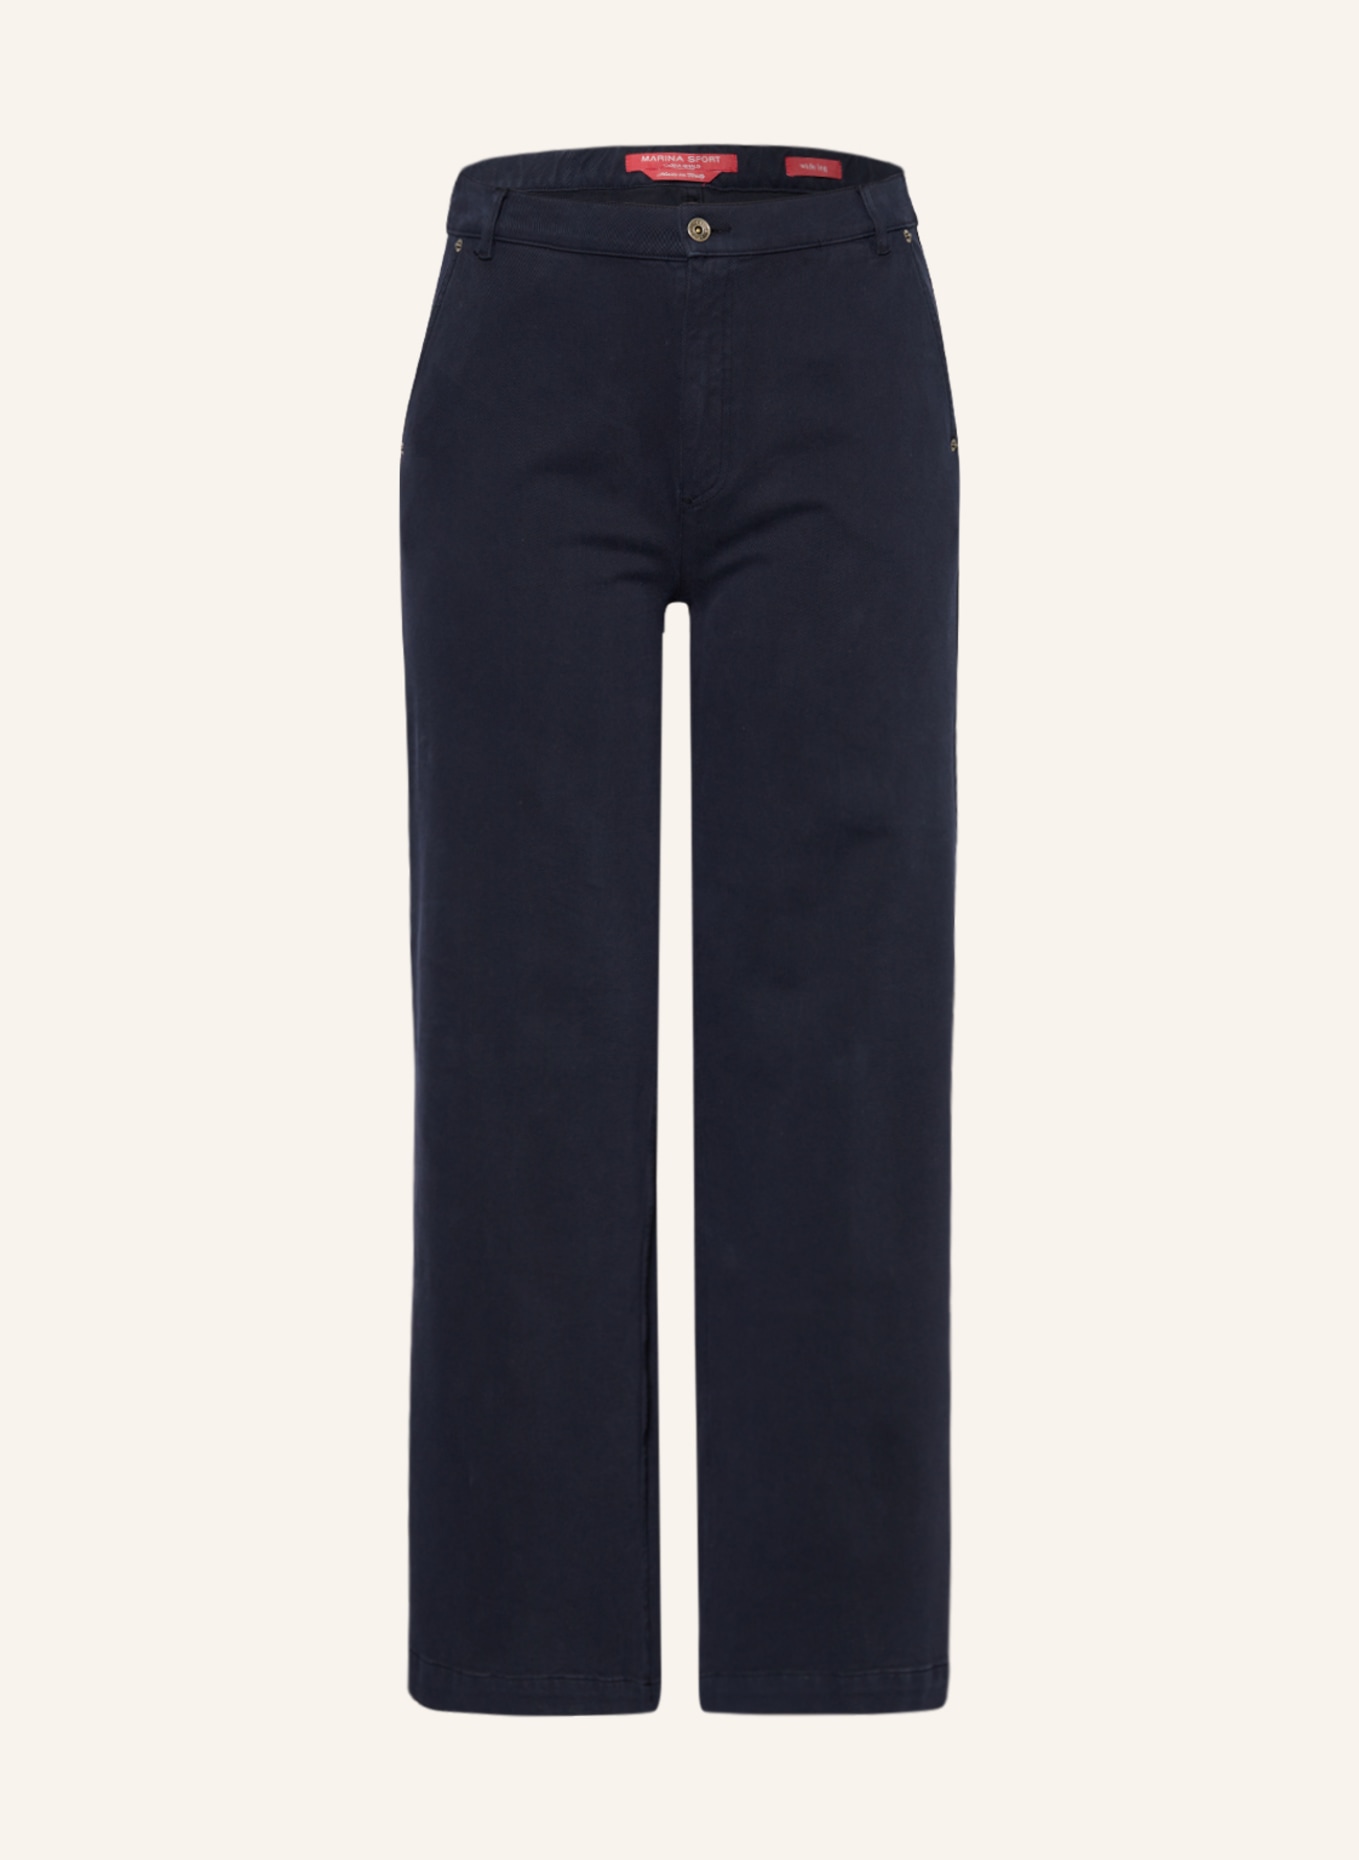 MARINA RINALDI SPORT Jeans RAMATO, Farbe: 058 Blu (Bild 1)